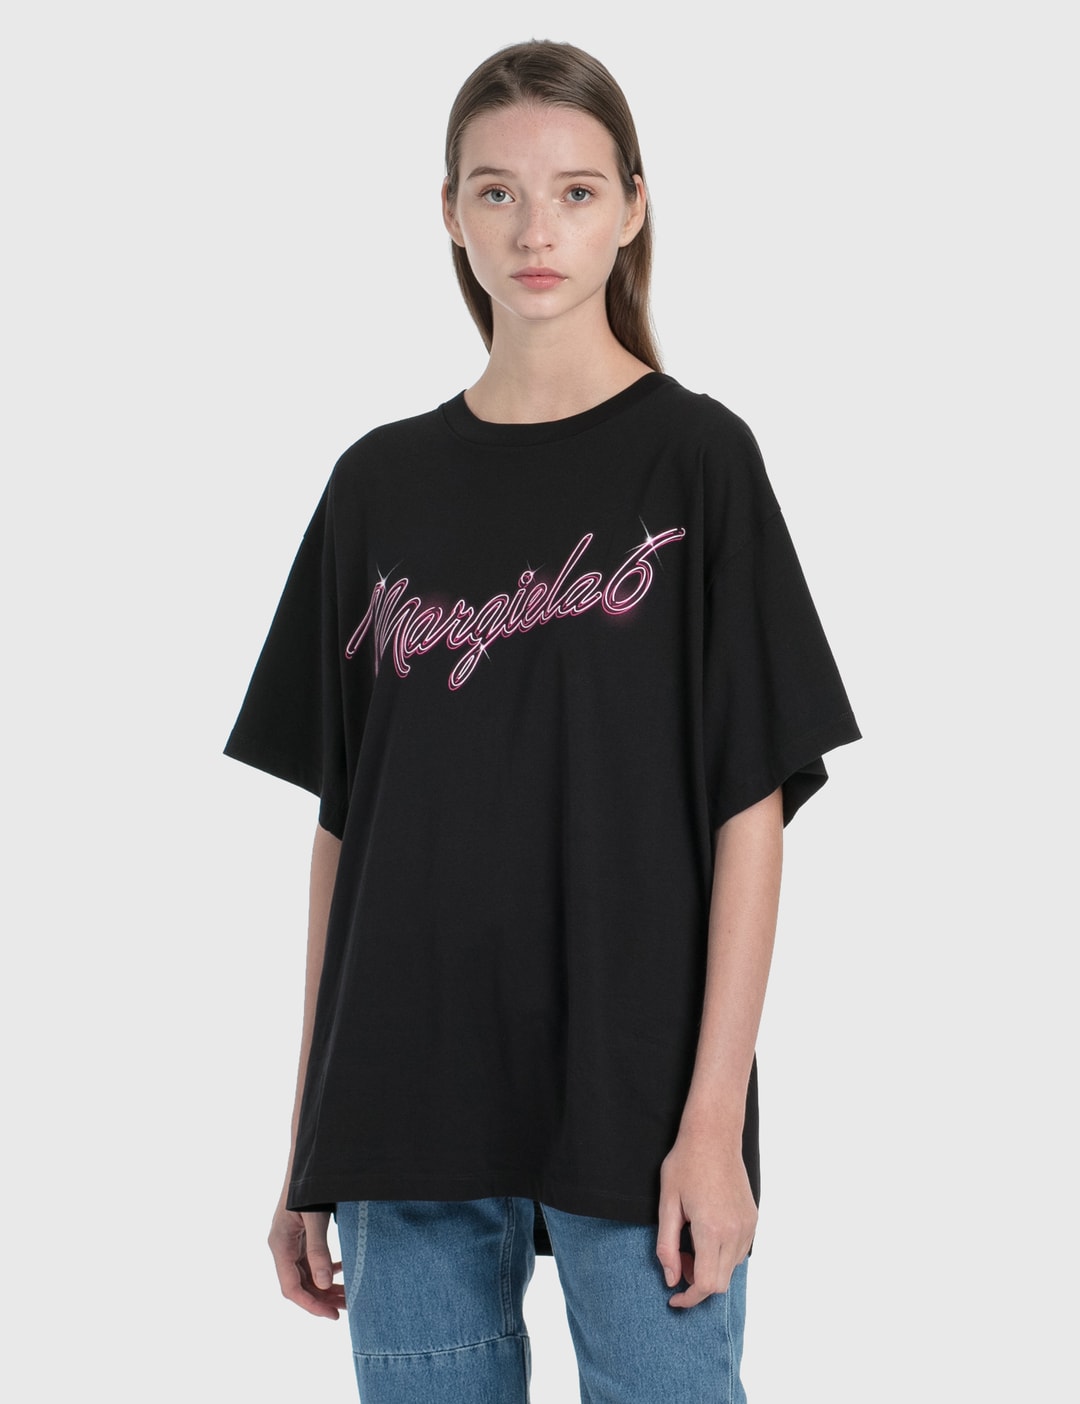 MM6 Maison Margiela - Margiela 6 Neon Logo T-Shirt | HBX - Globally ...